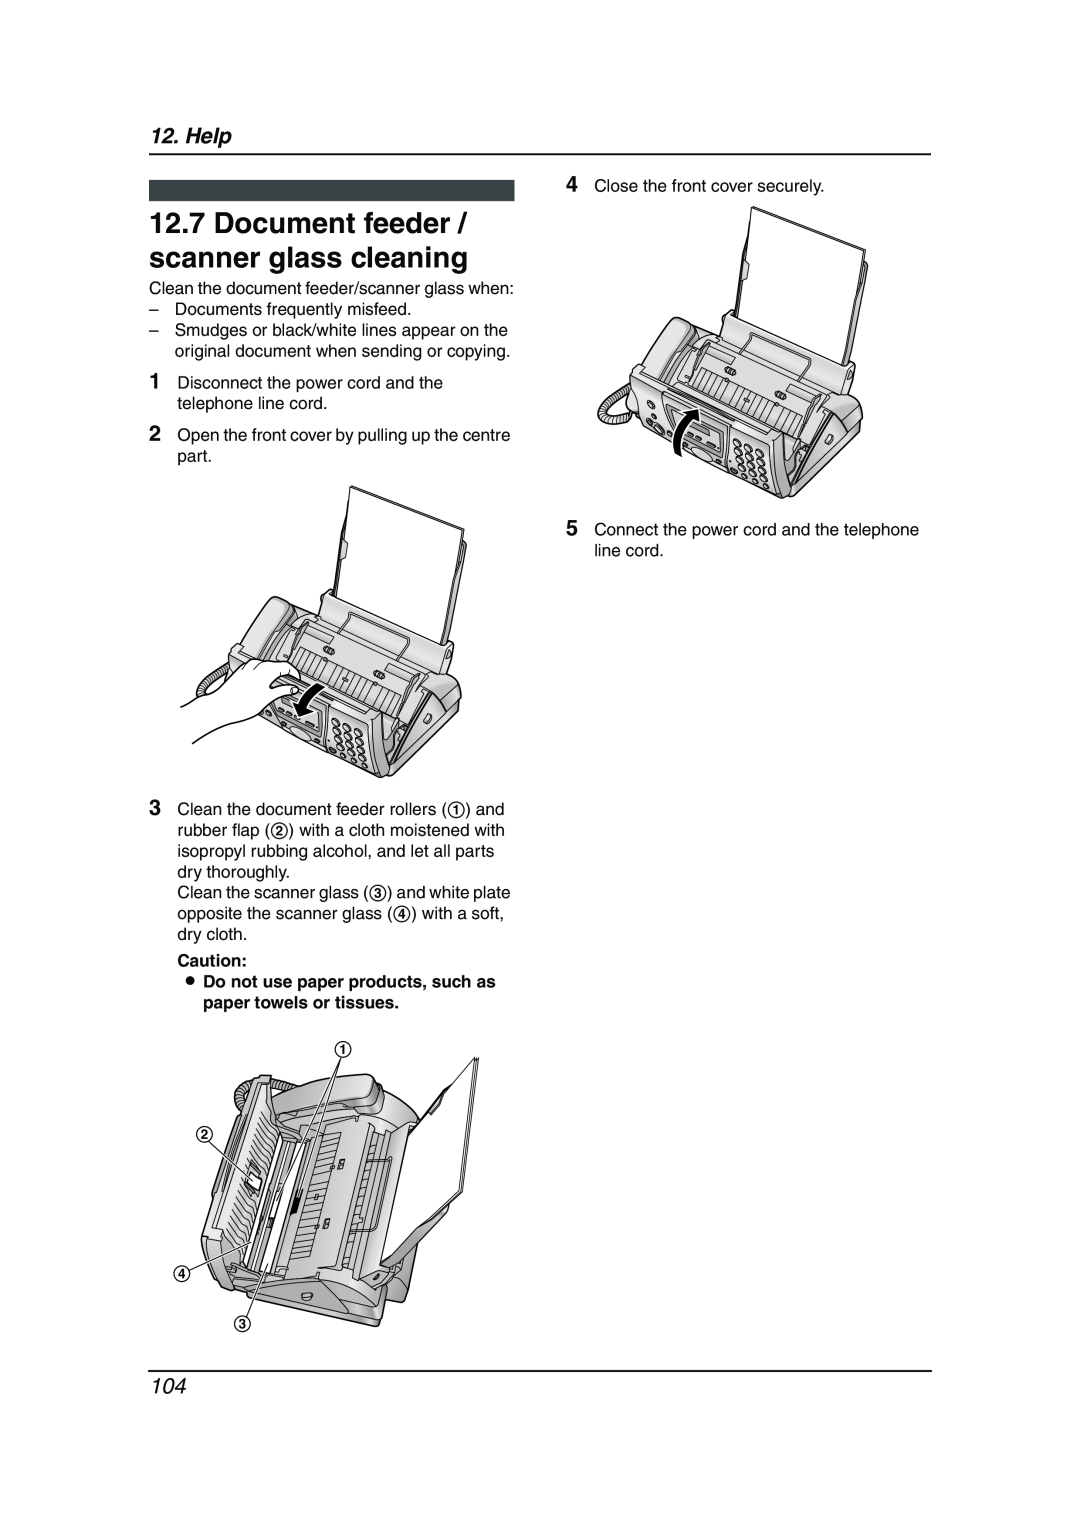 Panasonic KX-FC241AL manual Document feeder / scanner glass cleaning, Help 